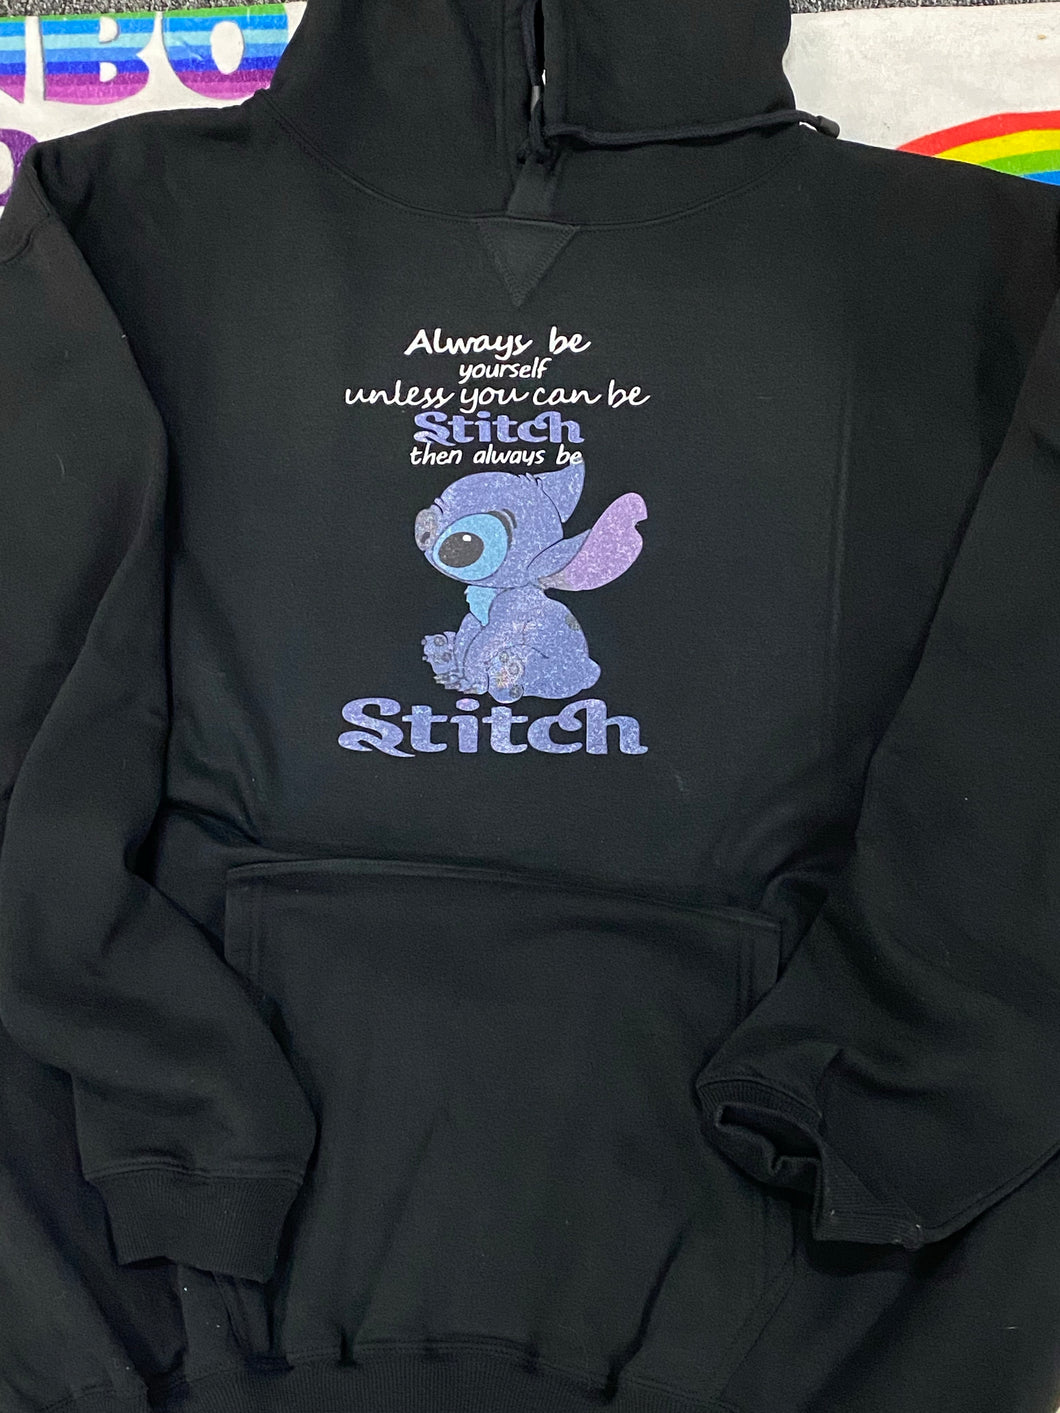 Stitch always be yourself hoodie